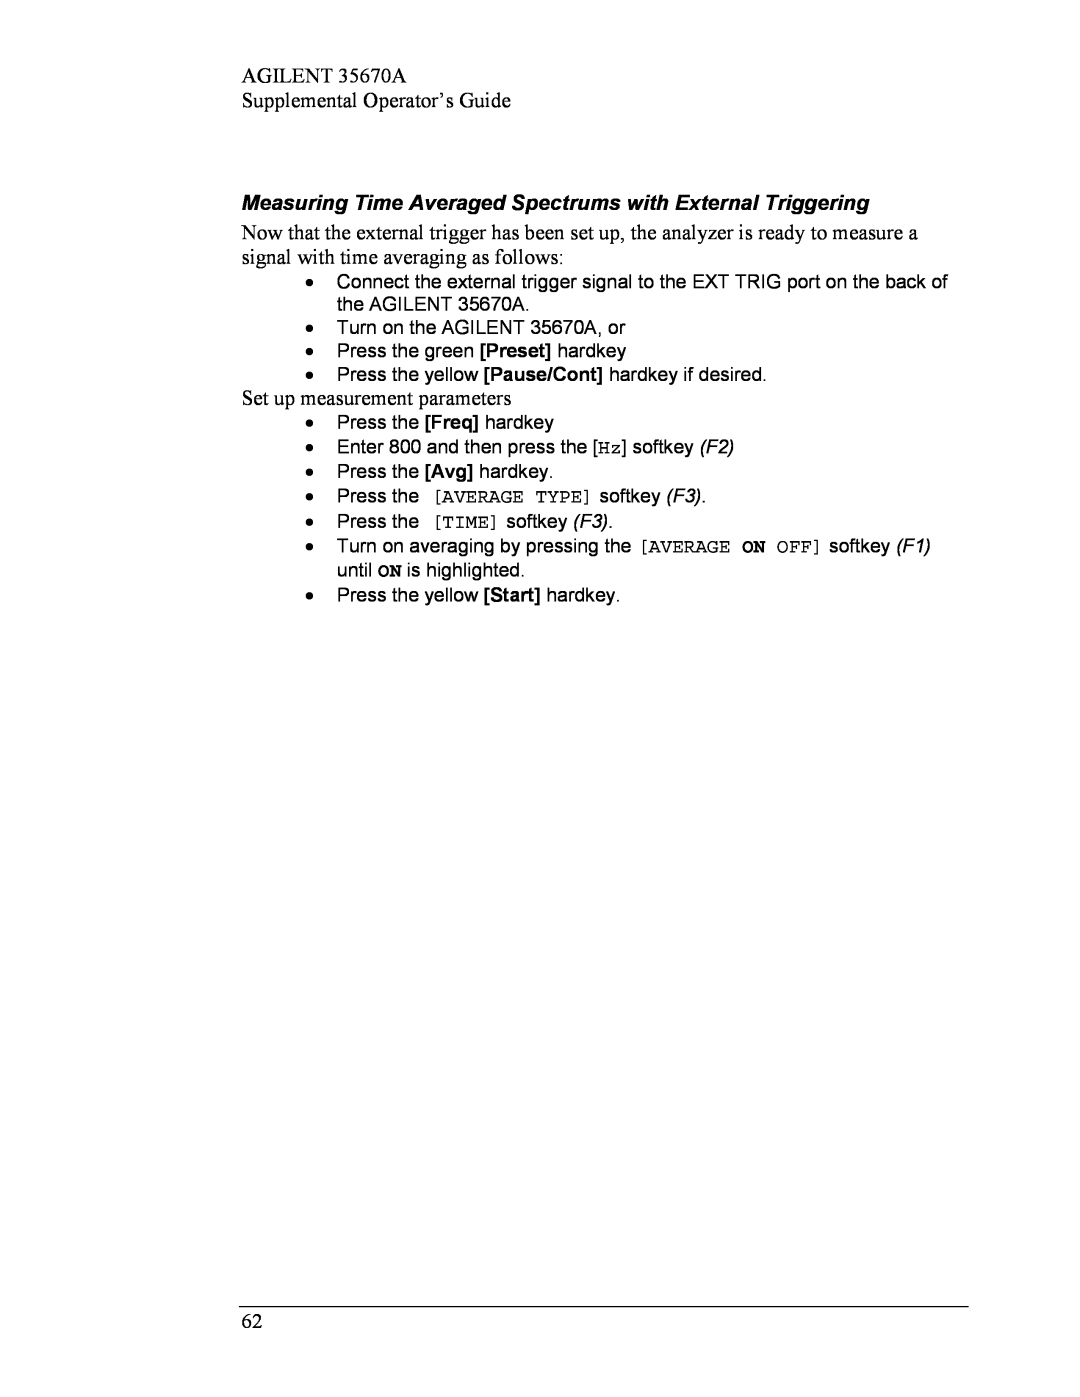 Agilent Technologies Agilent 35670A manual AGILENT 35670A Supplemental Operator’s Guide, Set up measurement parameters 